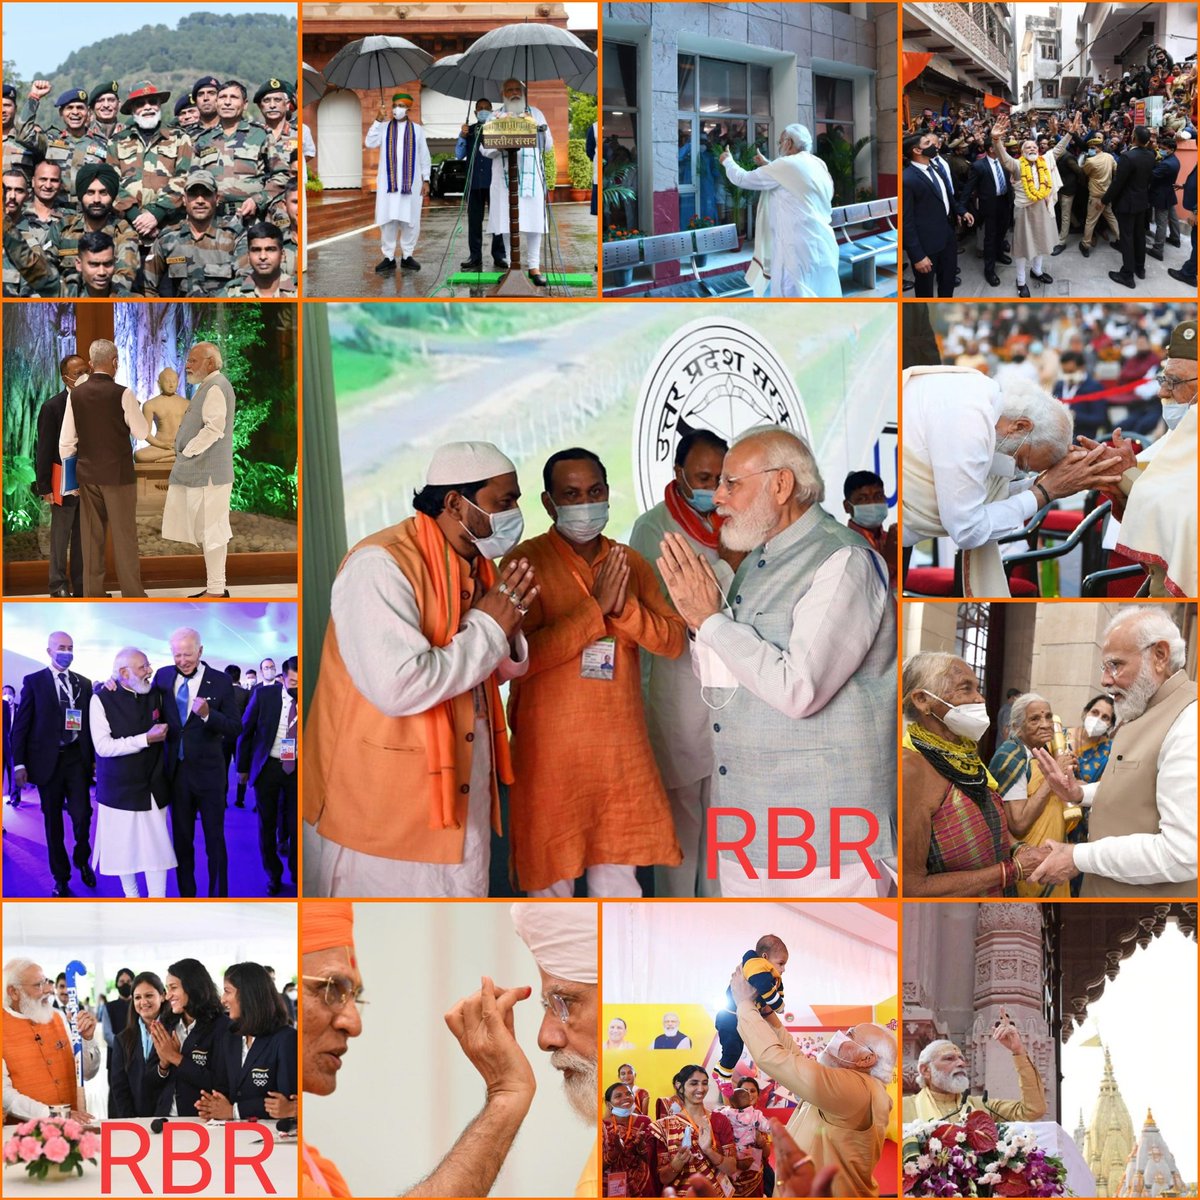 साल 2021 की पीएम मोदी जी की कुछ खास तस्वीर  🙏

#India #PMModi #FlashBack2021 
#ByeBye2021 #NarendraModi #RBR